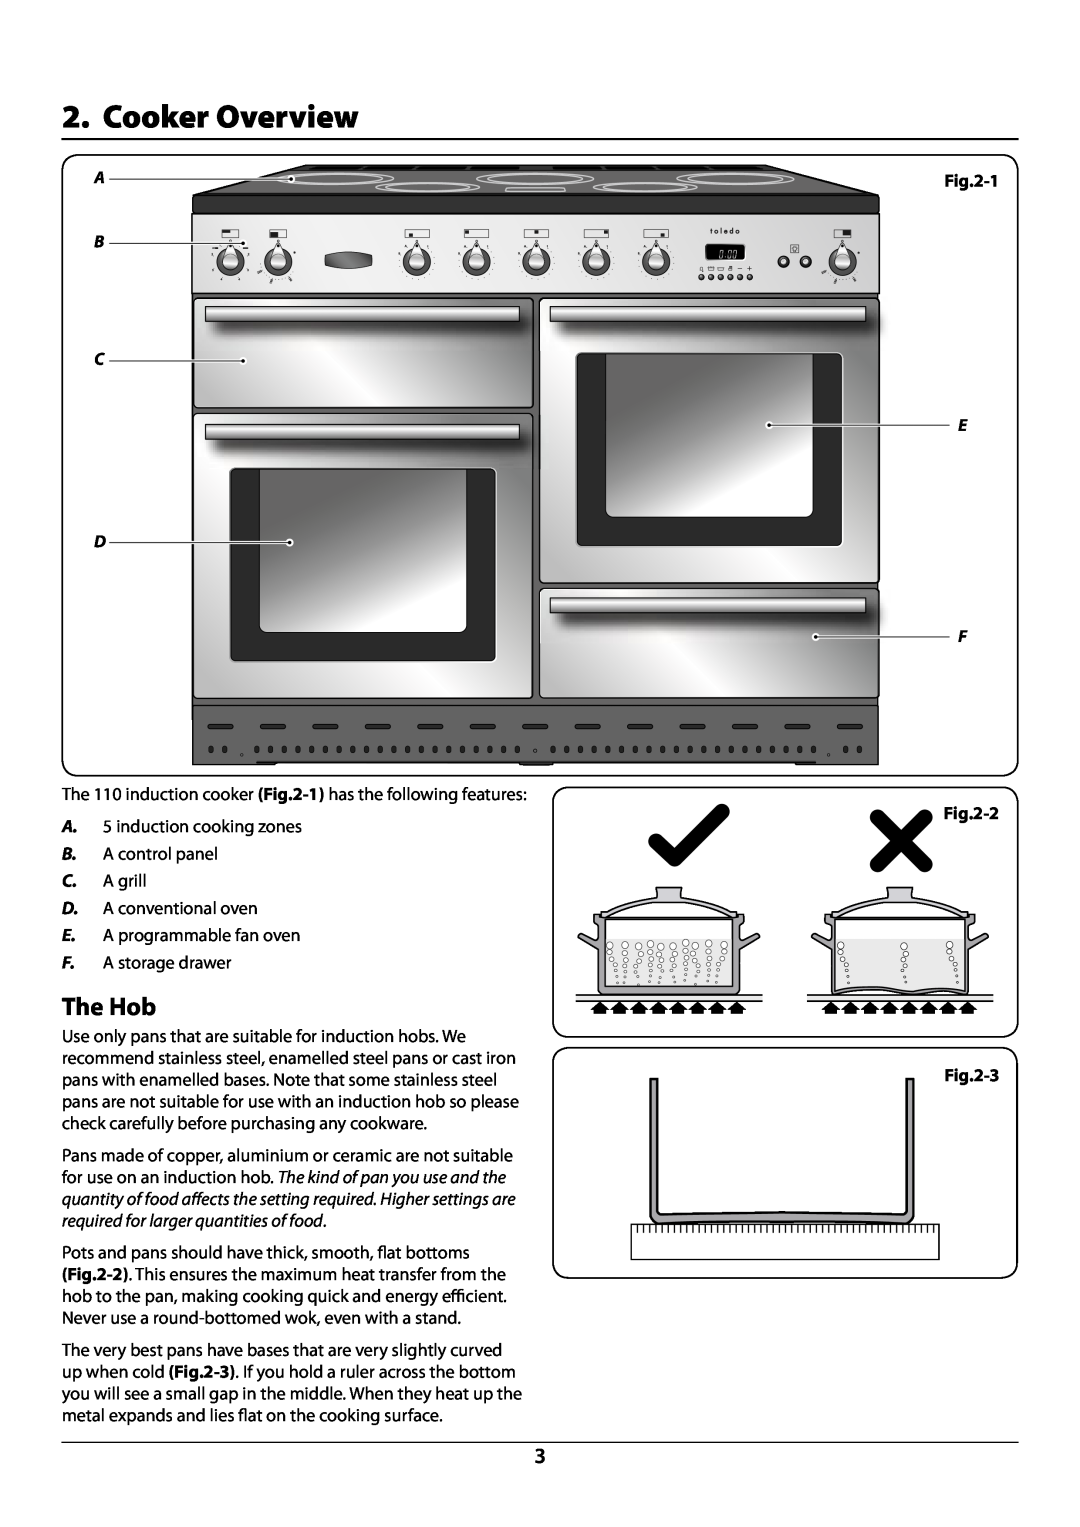 Rangemaster U109948 - 04 manual The Hob, Cooker Overview 